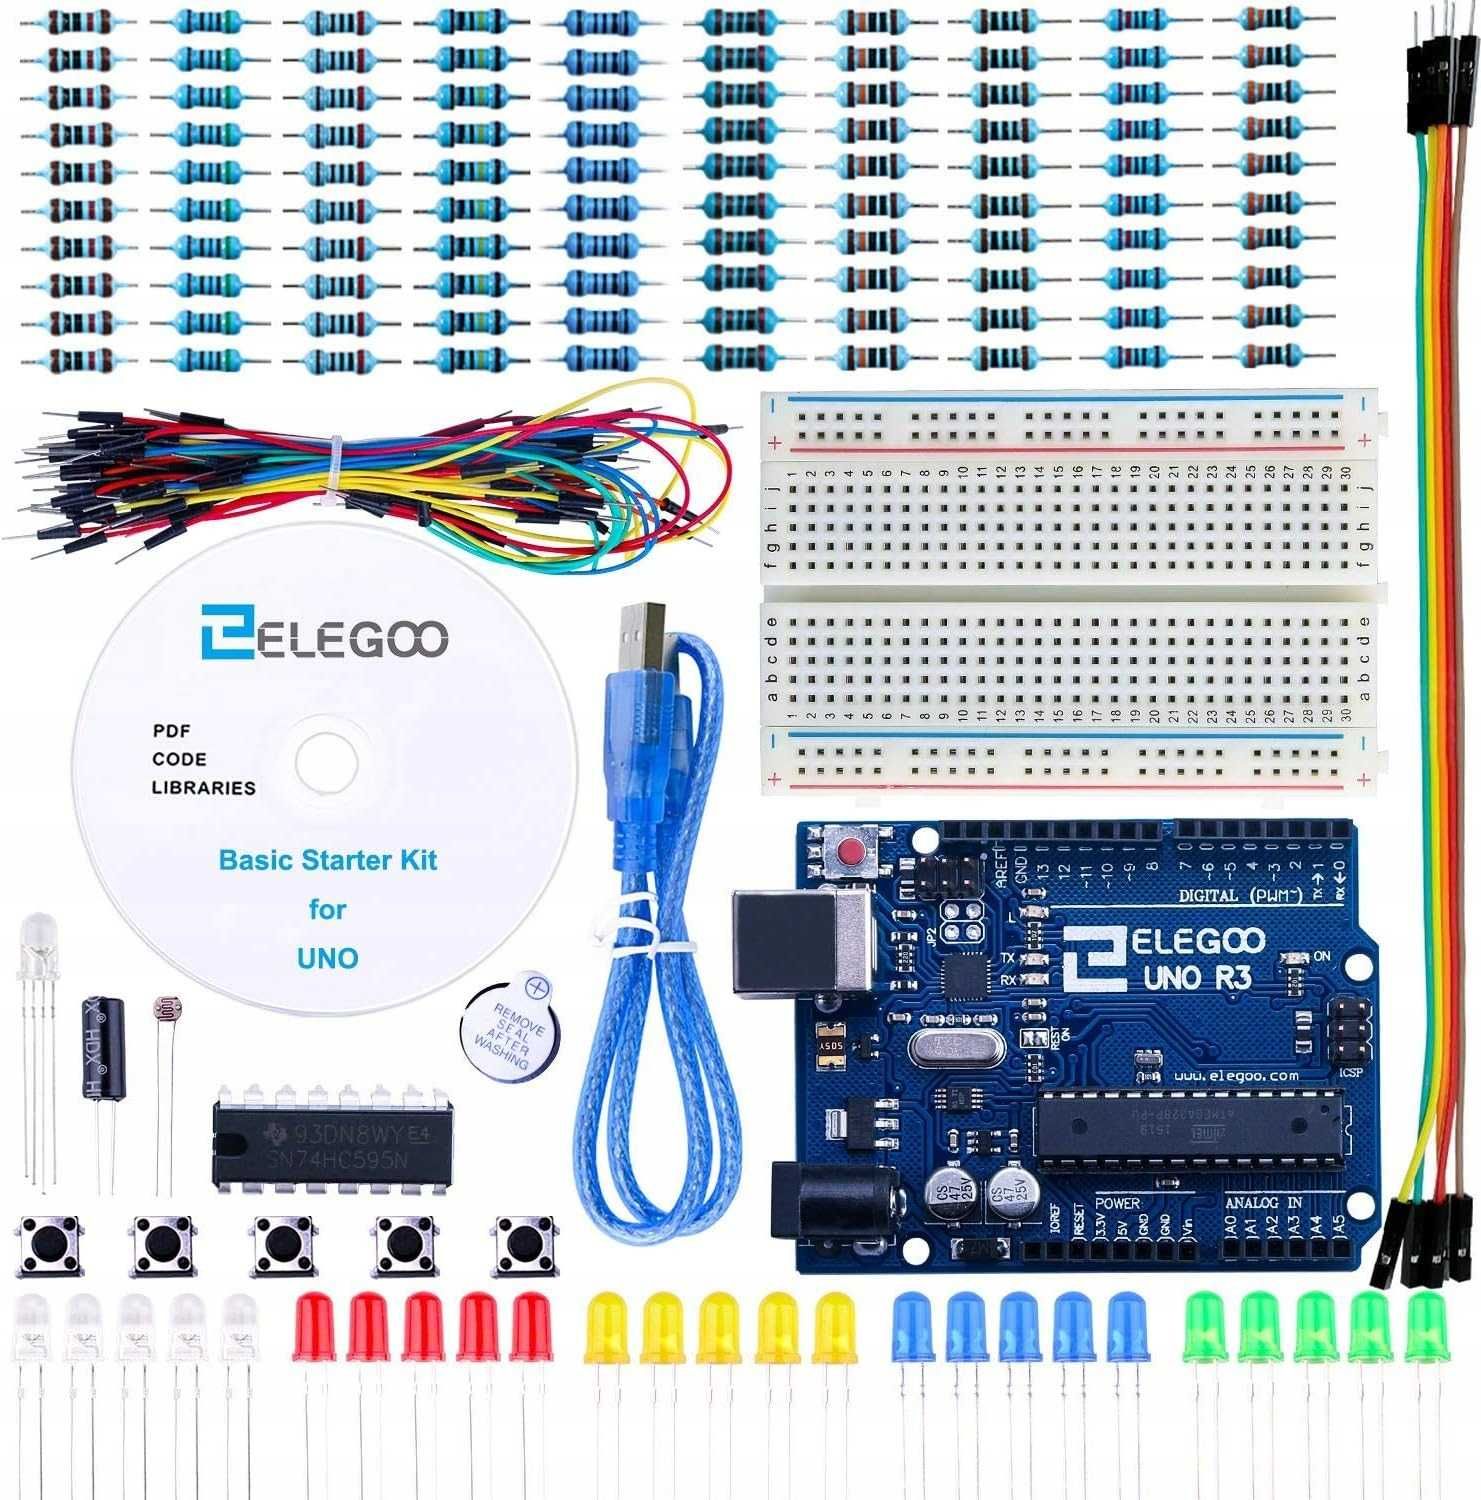 Elegoo basic starter kit UNO R3 zestaw do nauki jak Arduino IDE